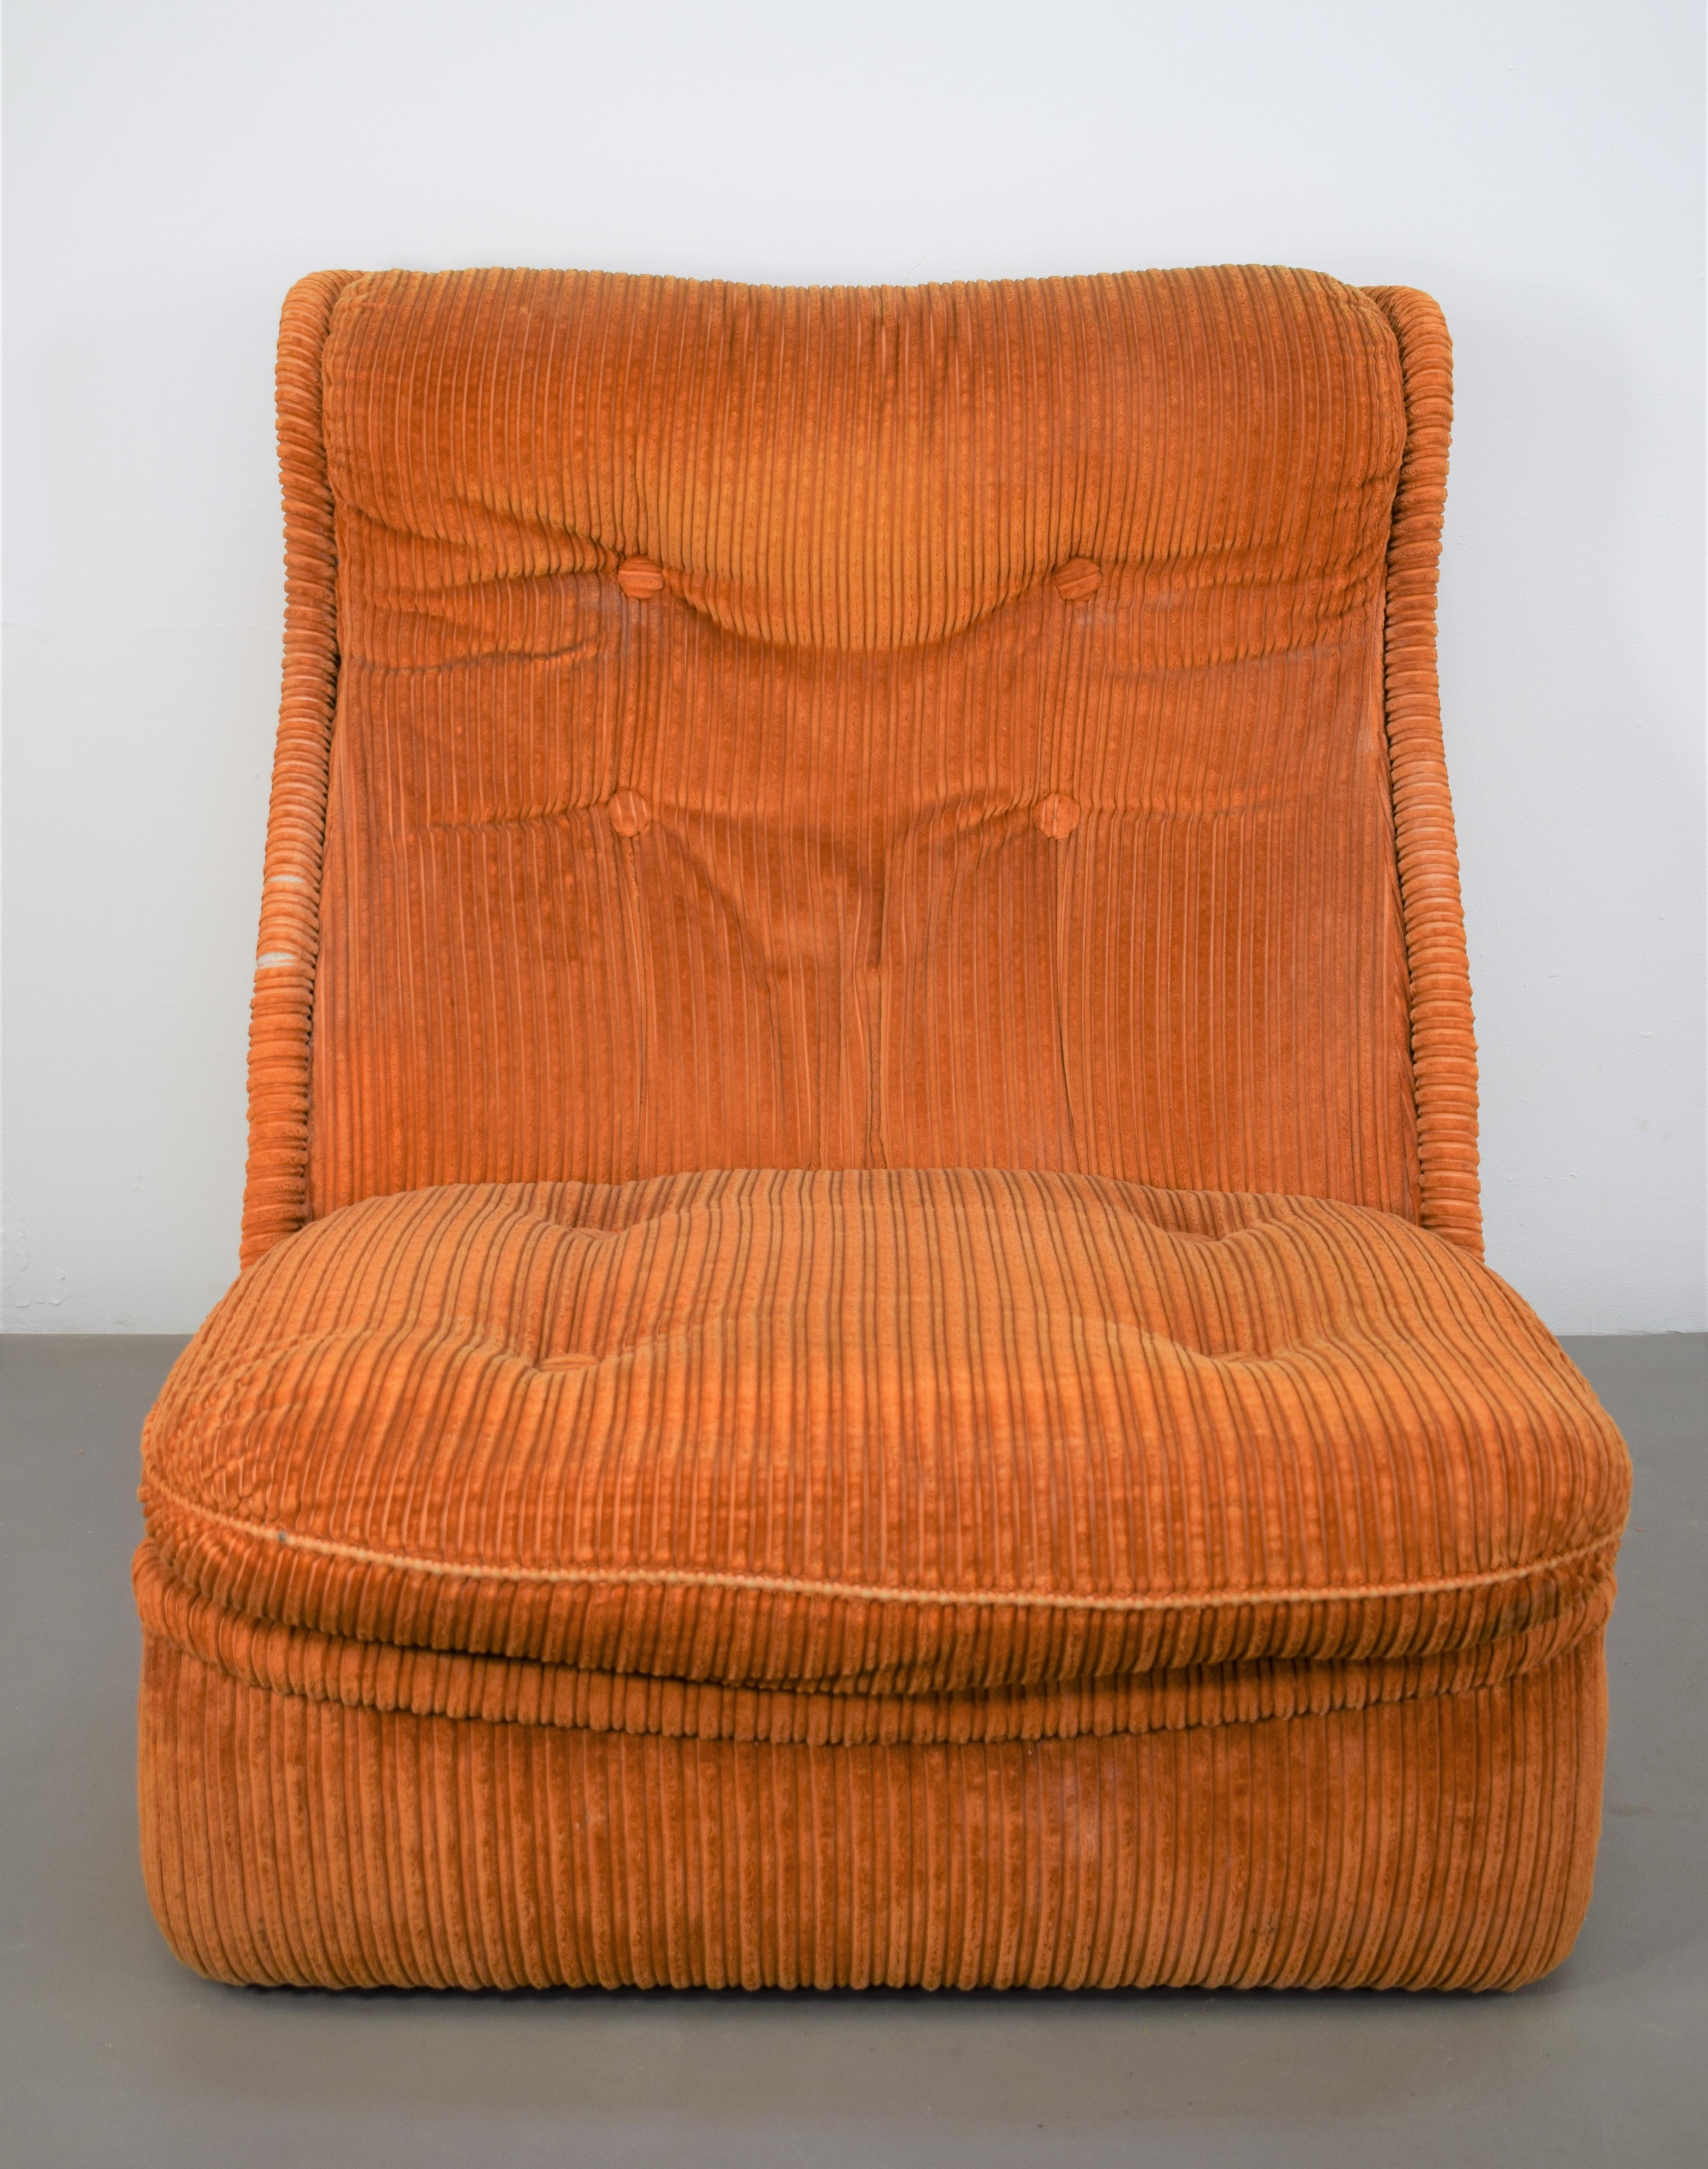 Italian pair of velvet armchairs, 1960s.

Dimensions: H= 88 cm; W= 82 cm; D= 105 cm; H S= 40 cm.